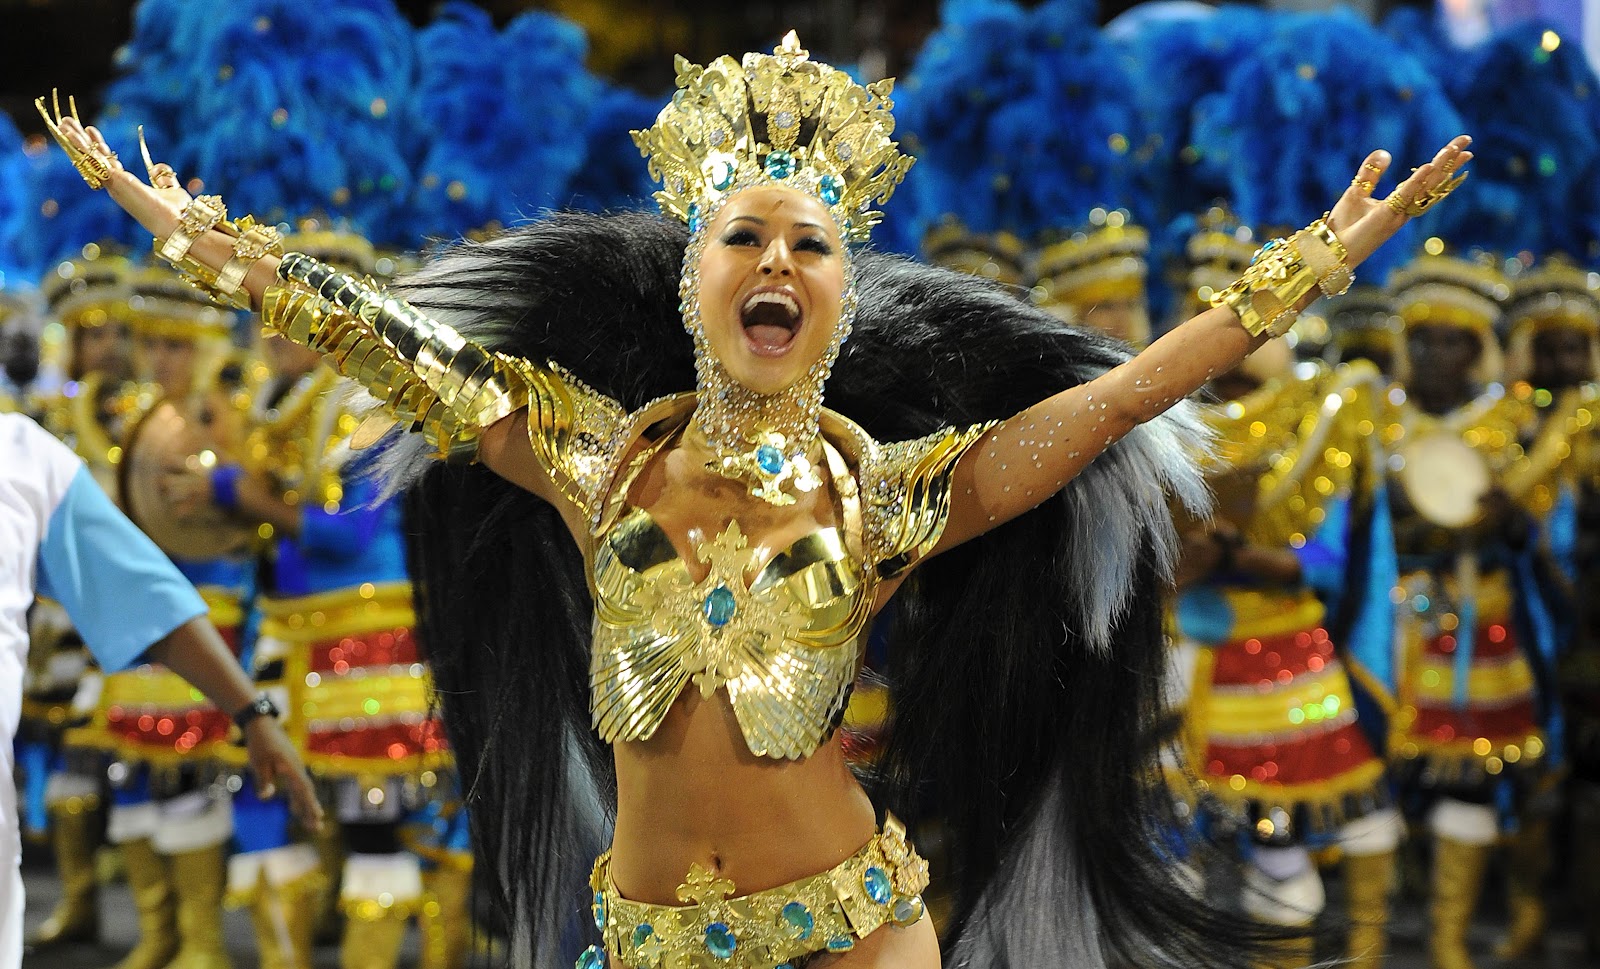 Samba Brasil